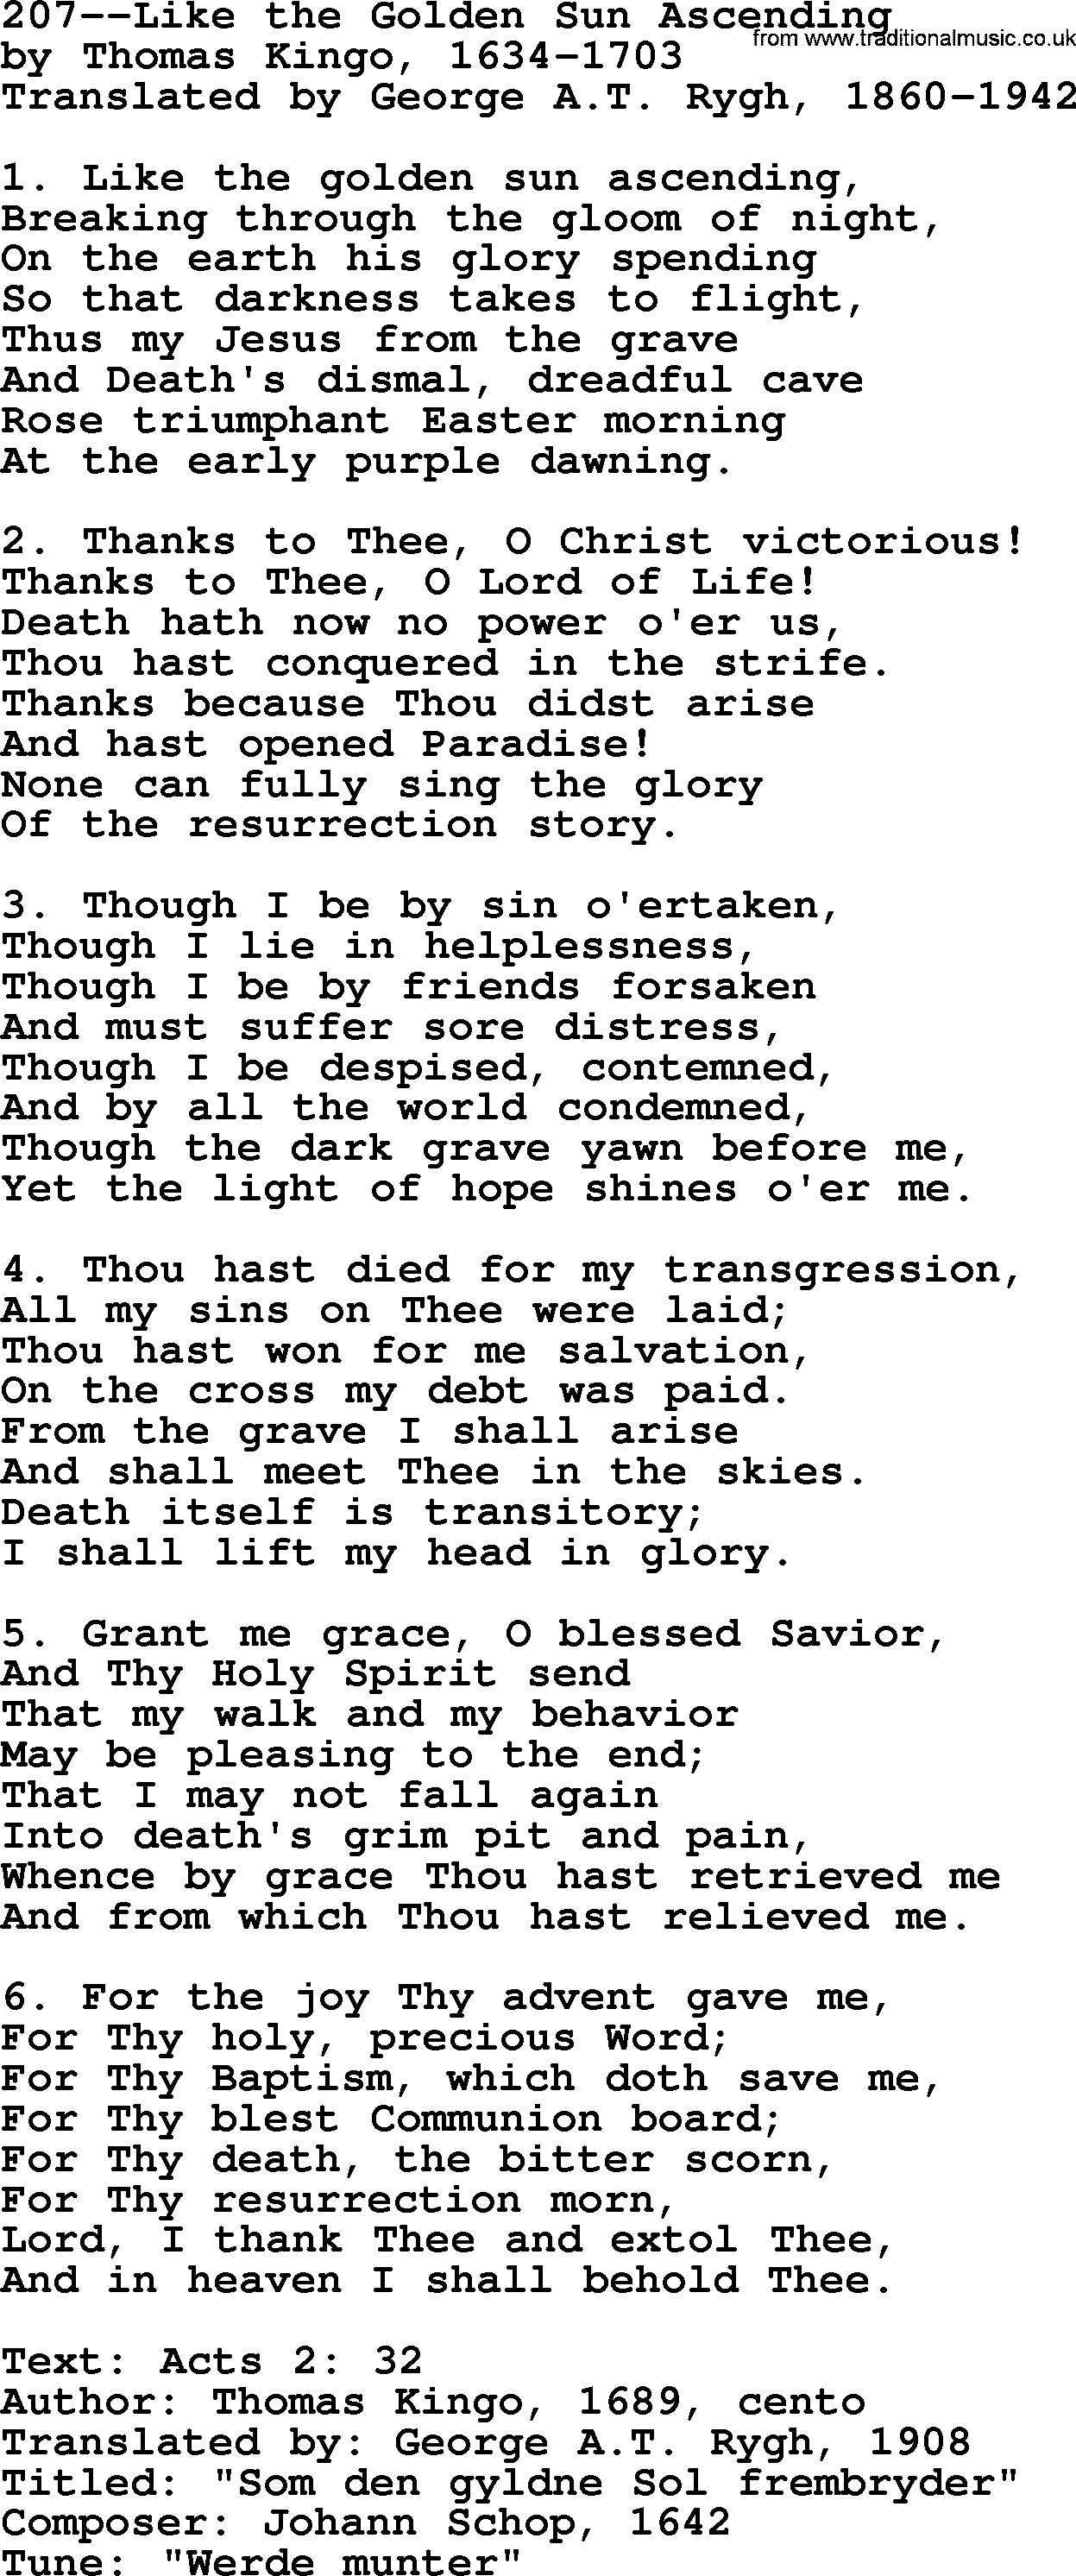 Lutheran Hymn: 207--Like the Golden Sun Ascending.txt lyrics with PDF